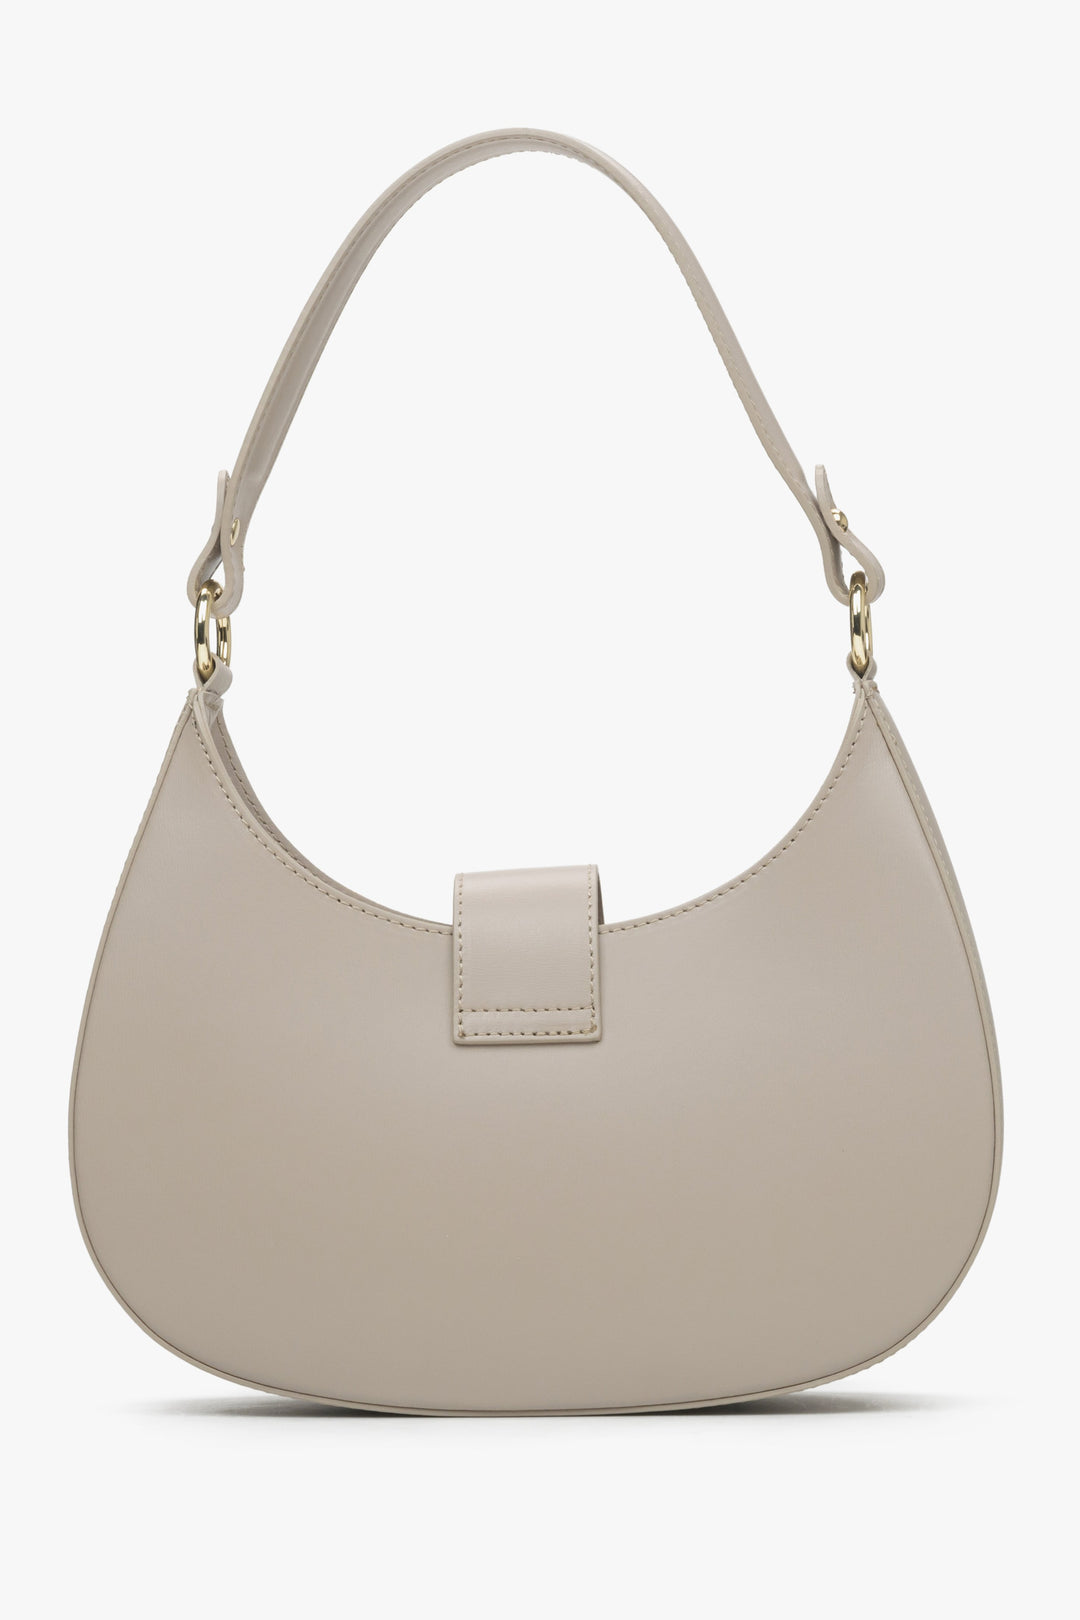 Estro women's leather handbag in beige colour - reverse side.